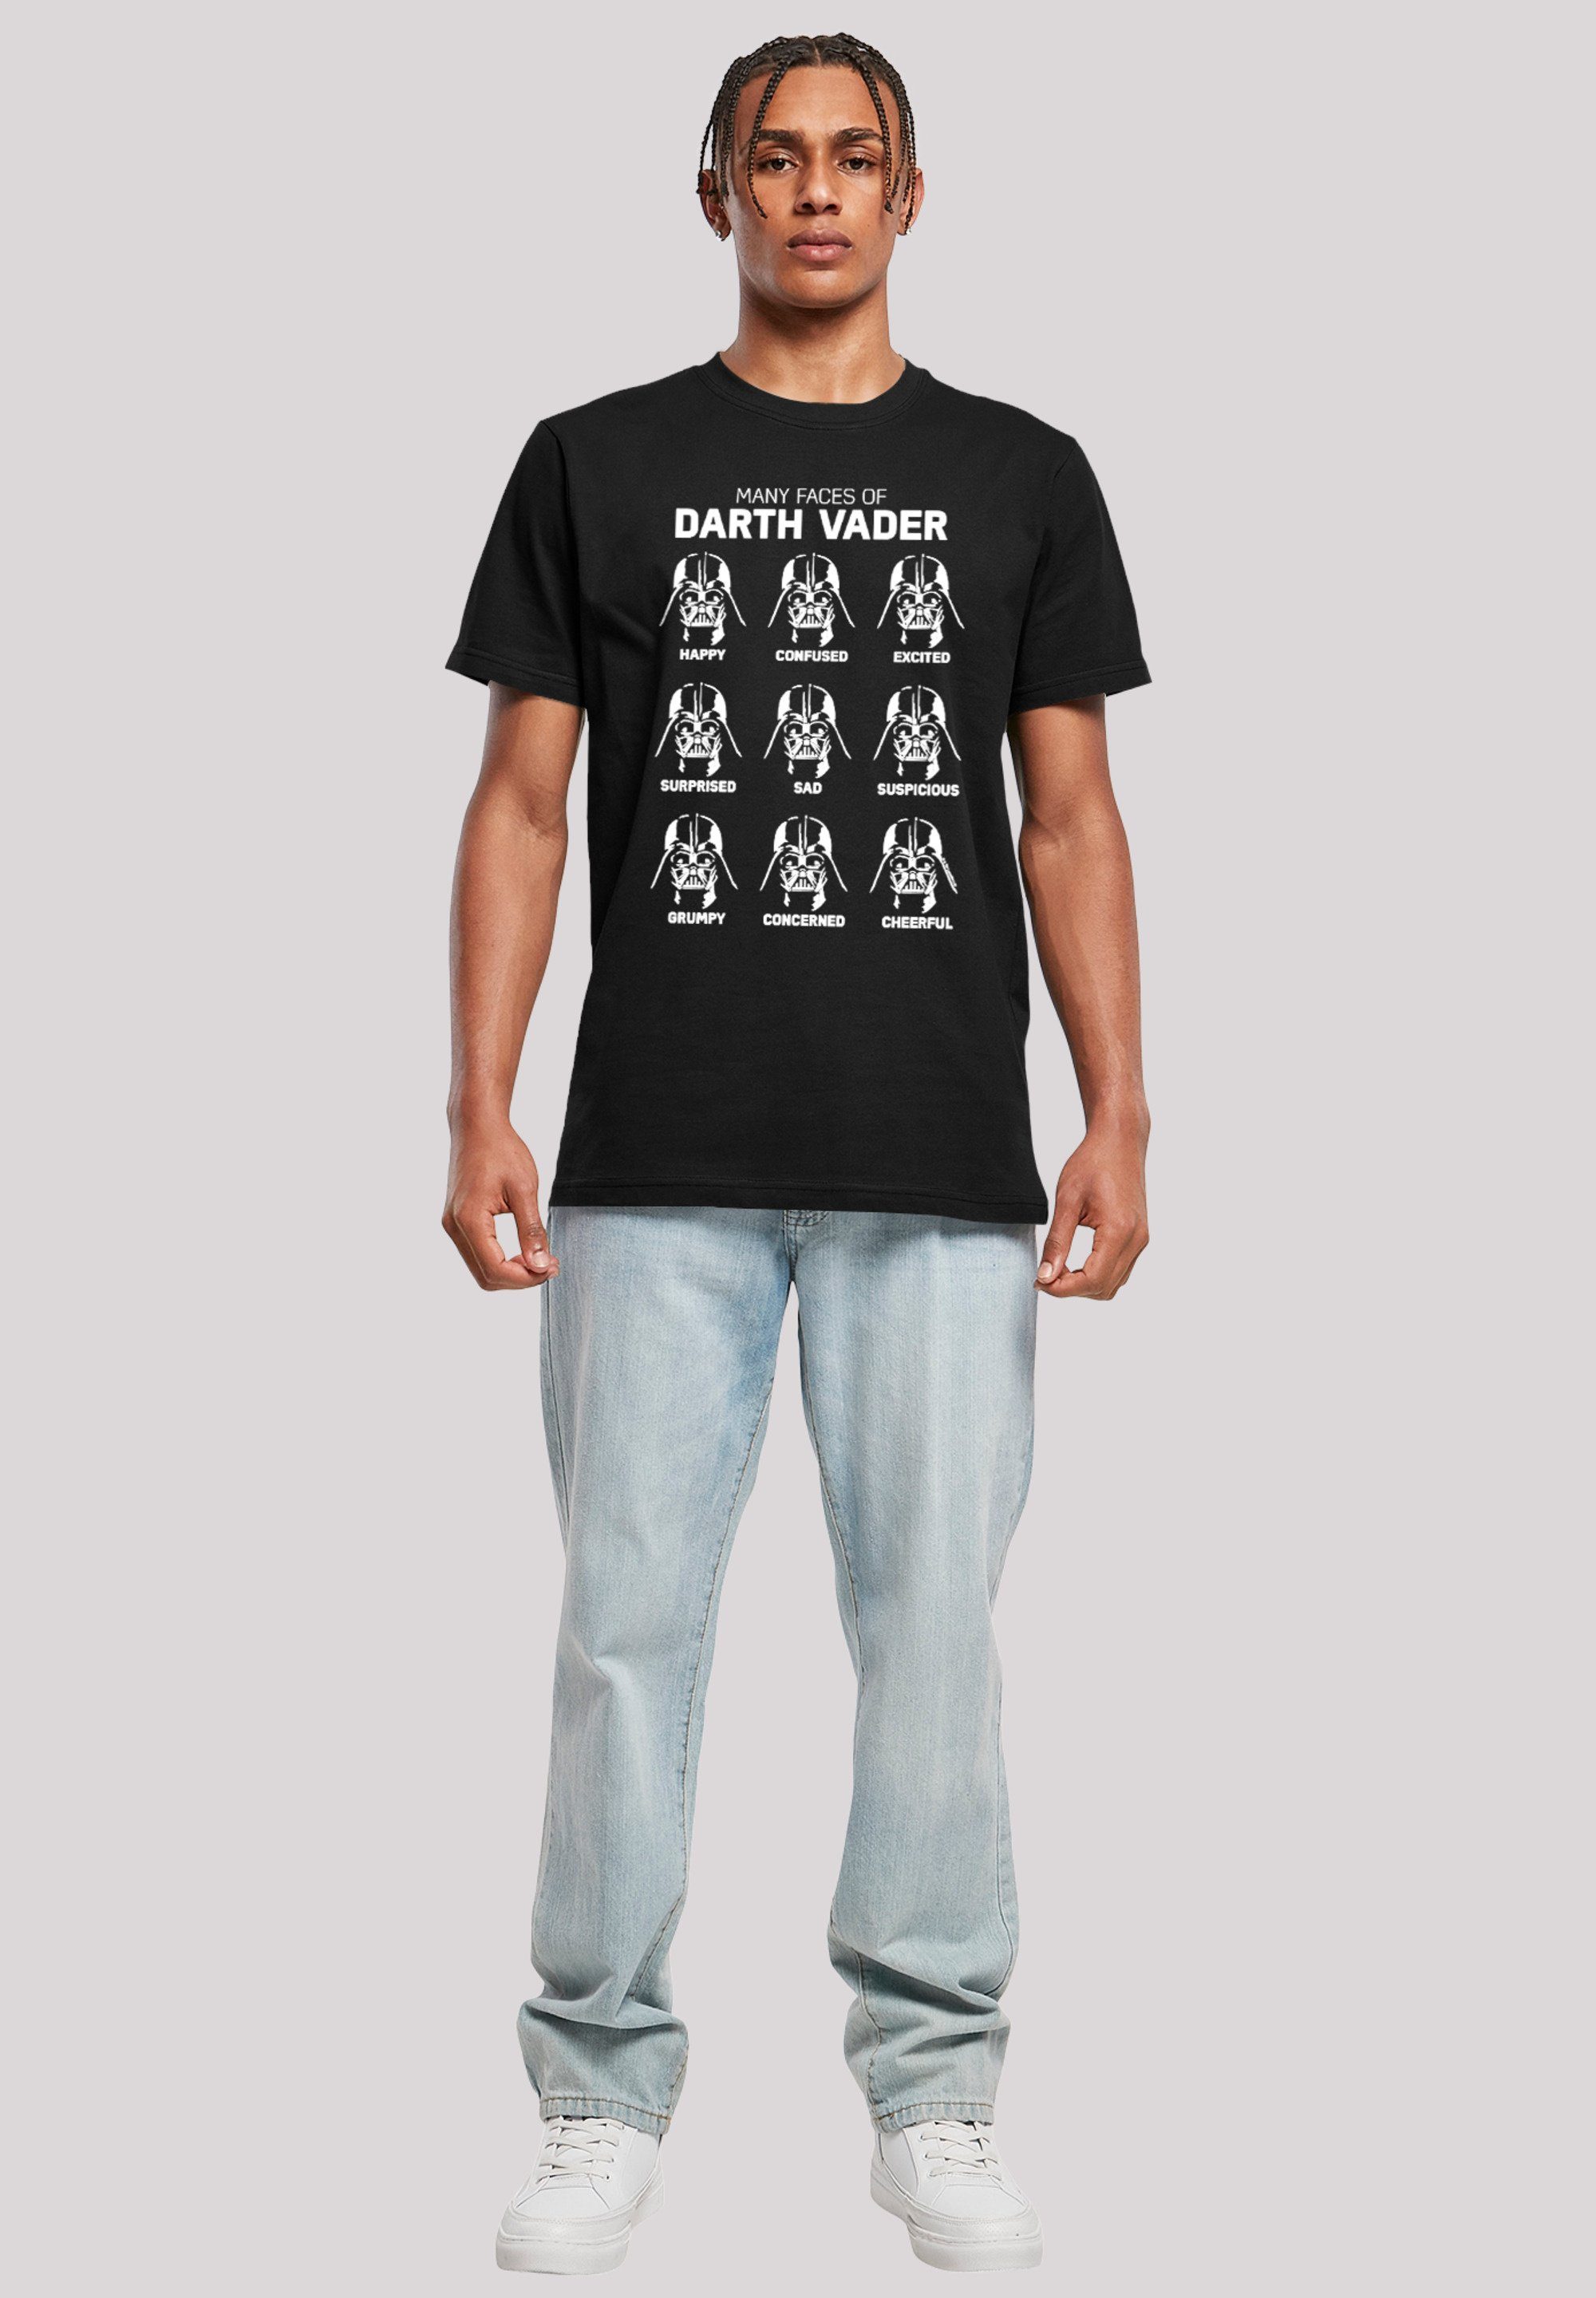 Wars Many Star The T-Shirt Of F4NT4STIC Print Darth s Vader